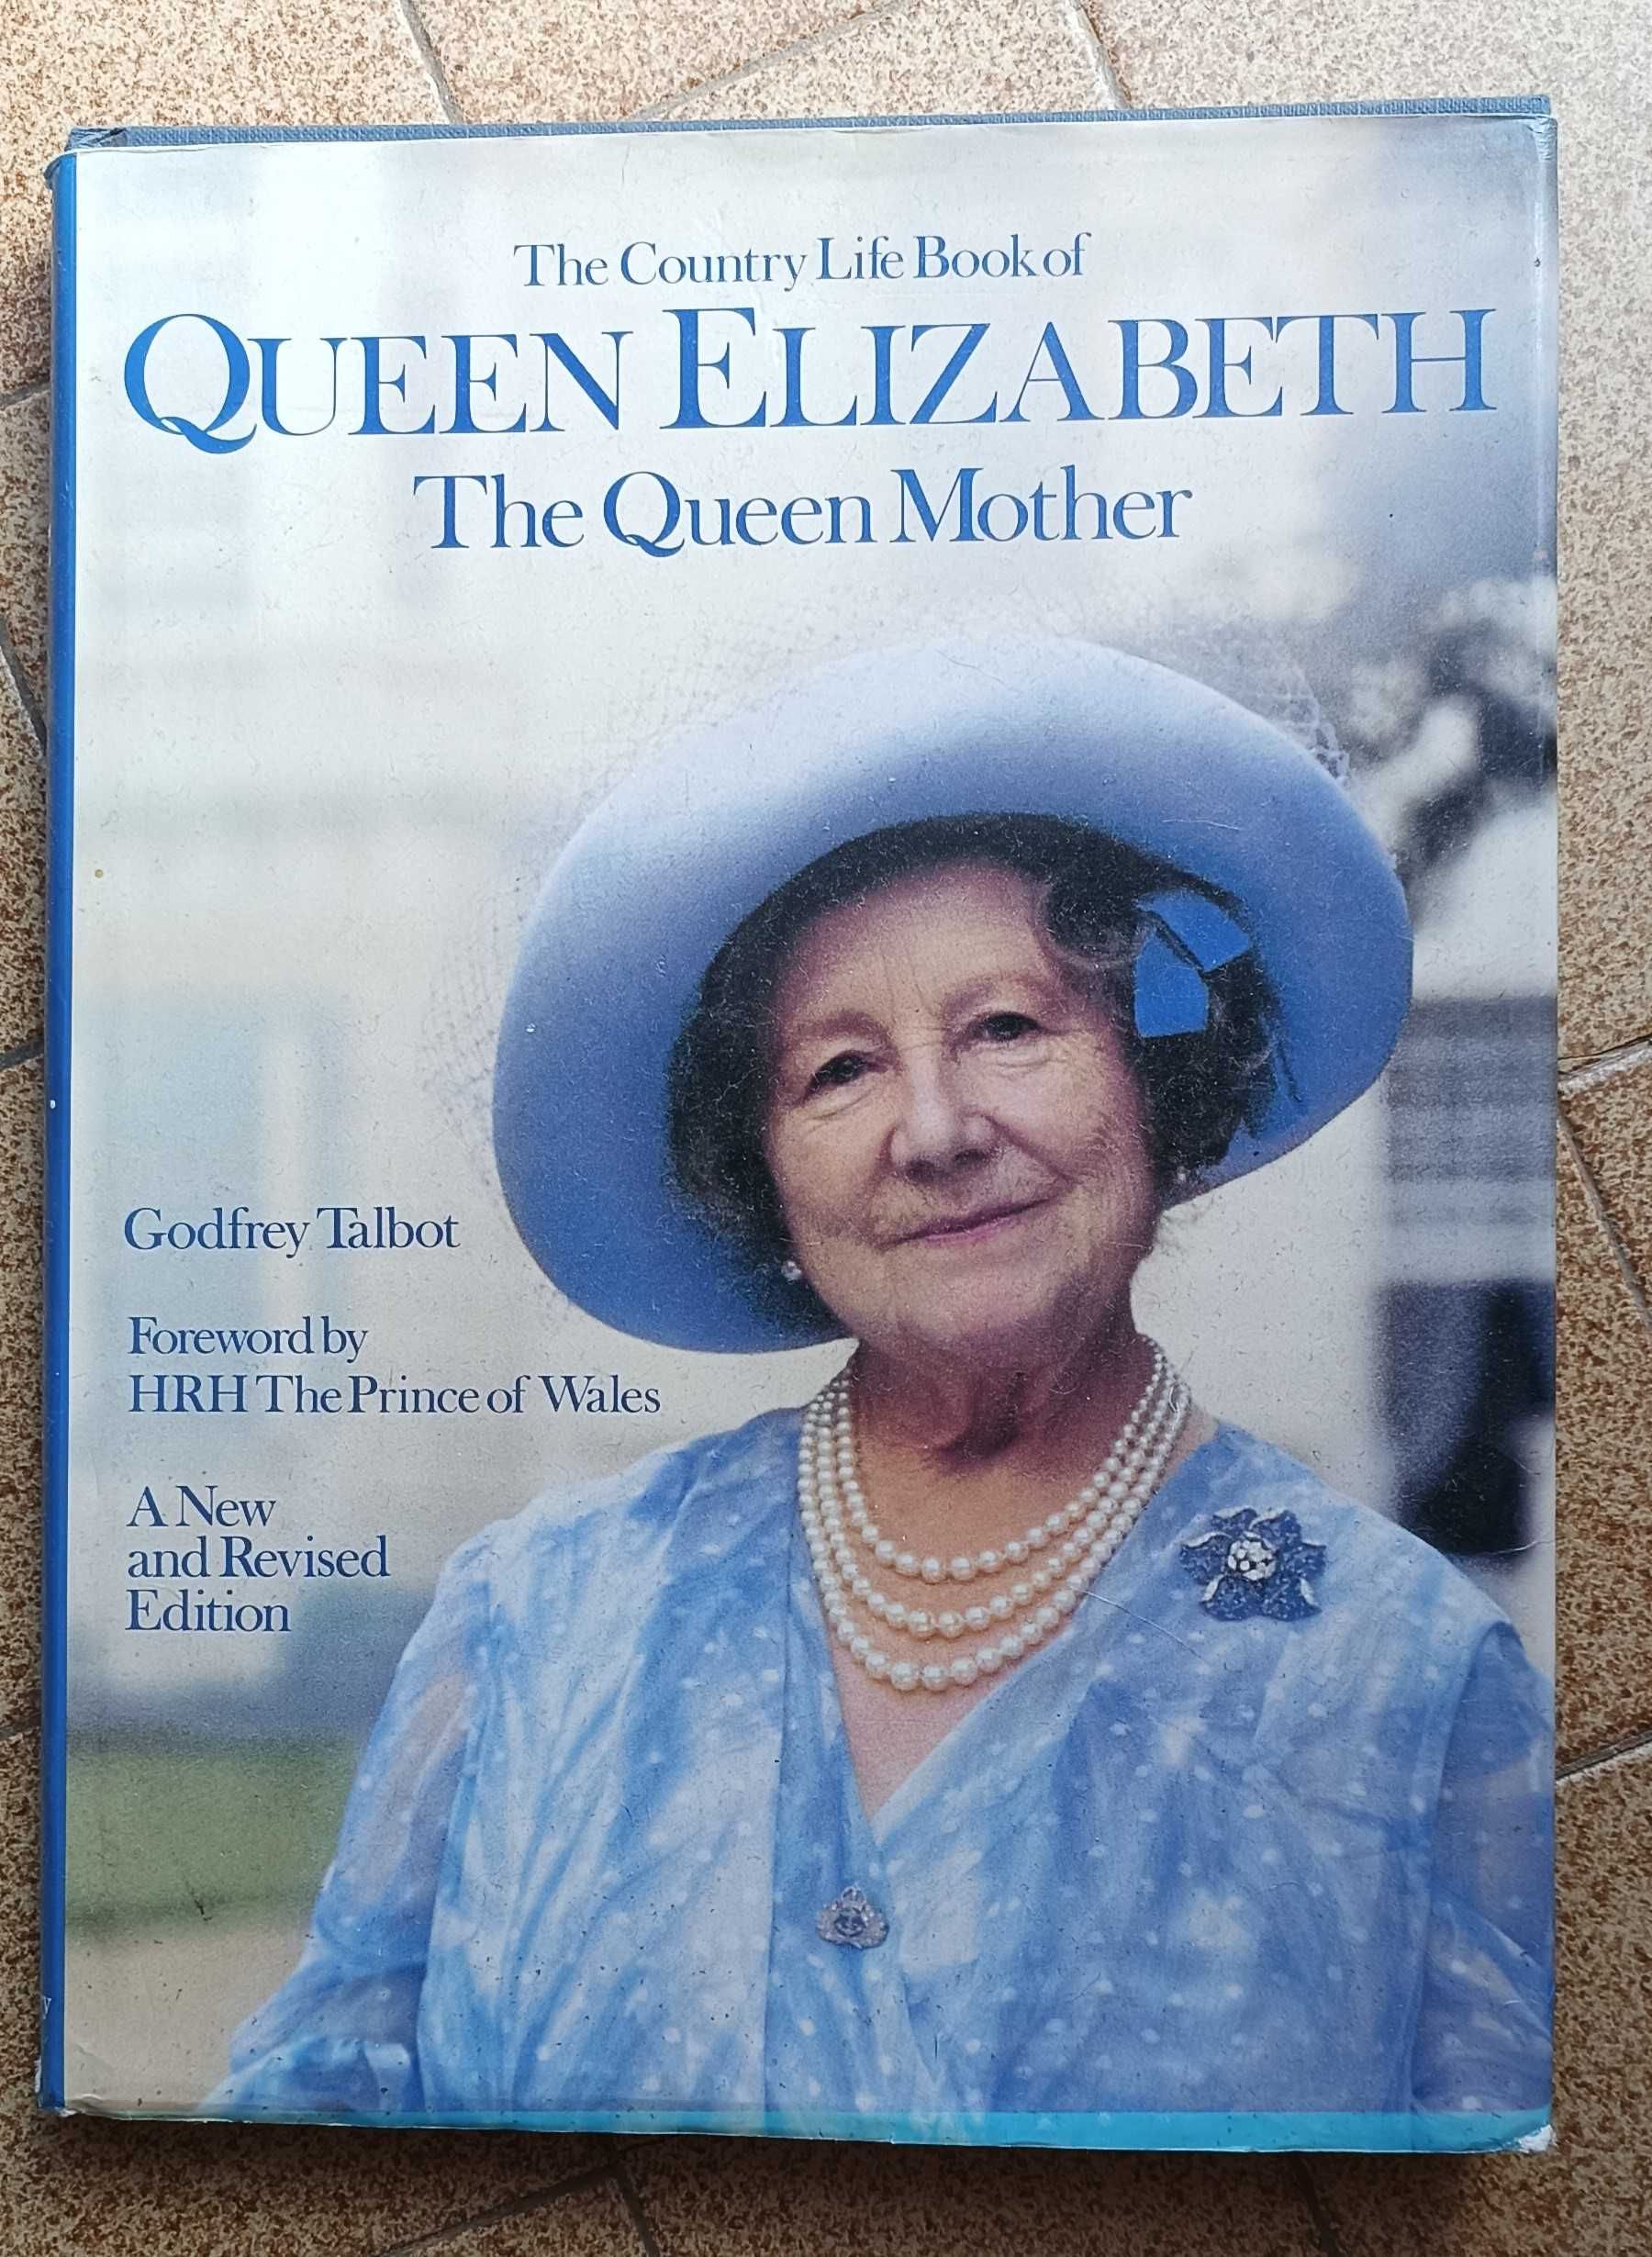 Livro sobre a Rainha Isabel - Queen Elizabeth the Queen Mother